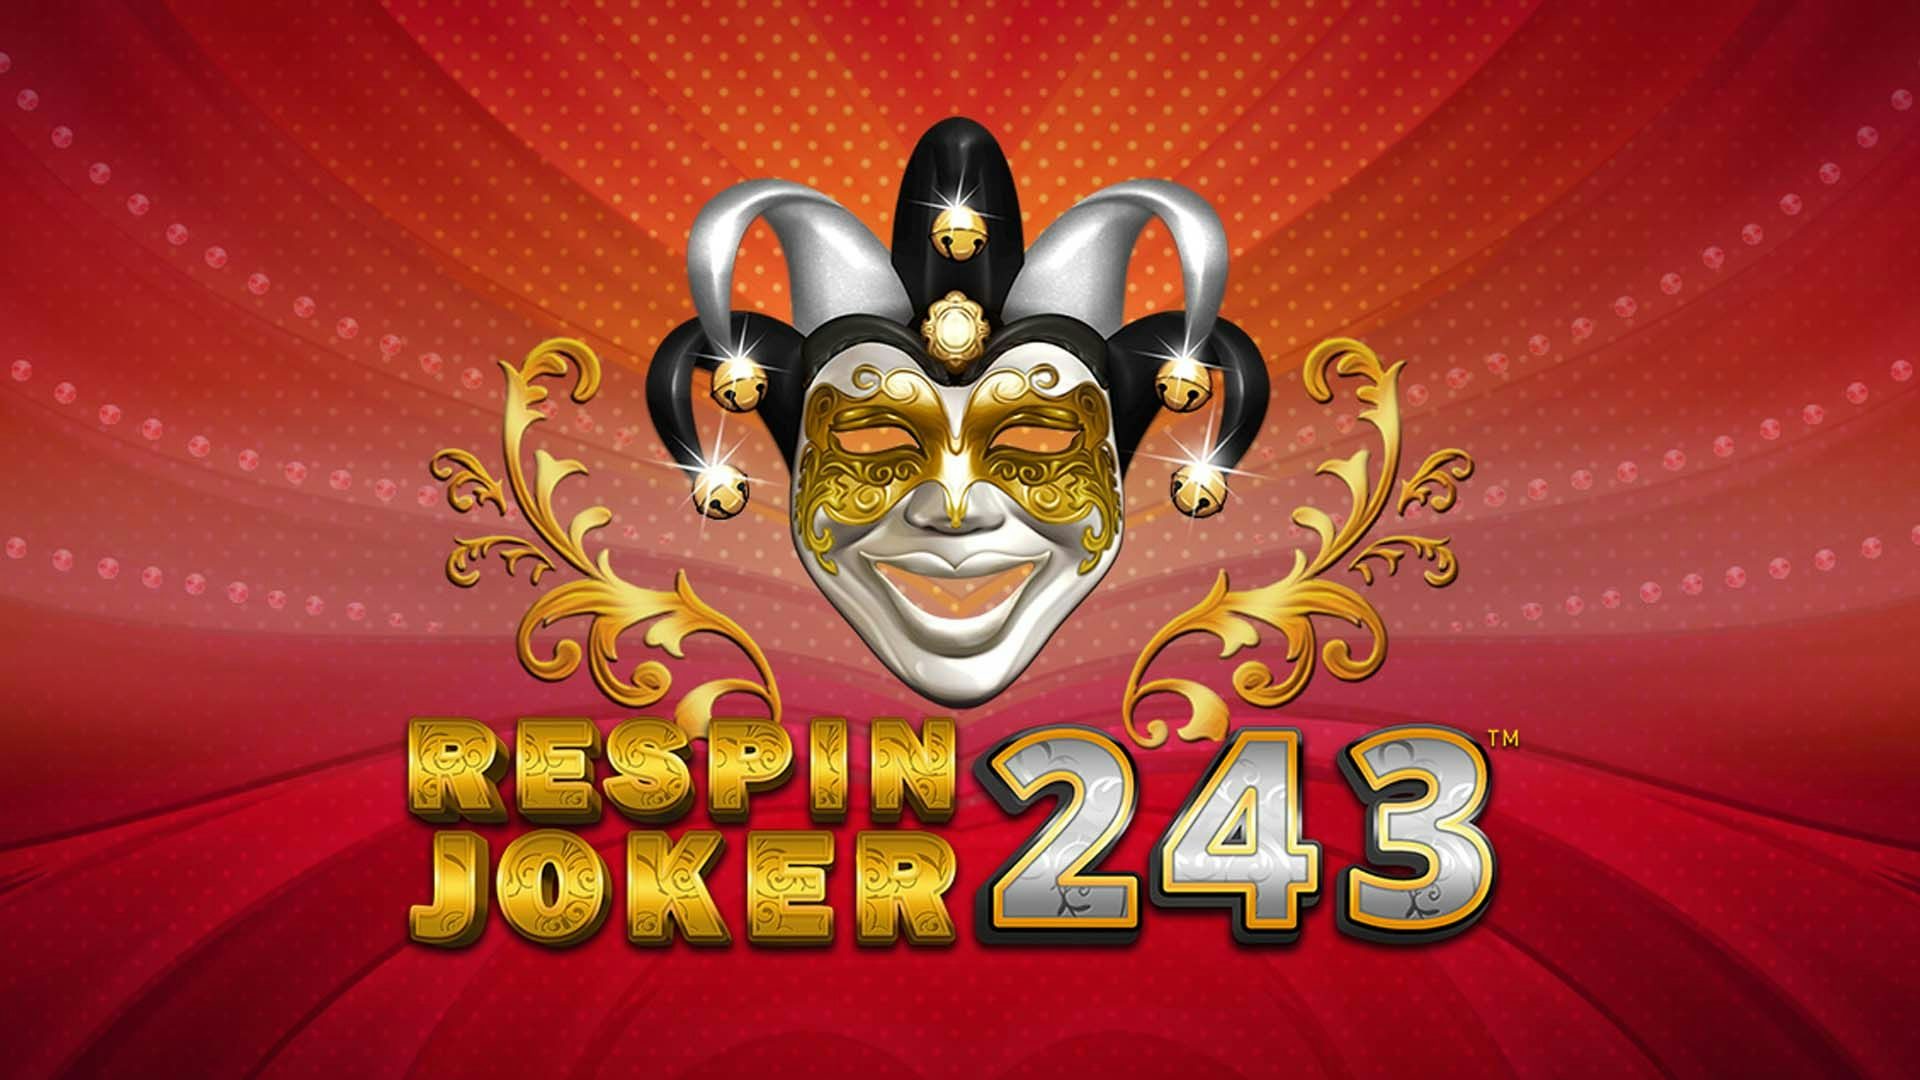 Respin Joker 243